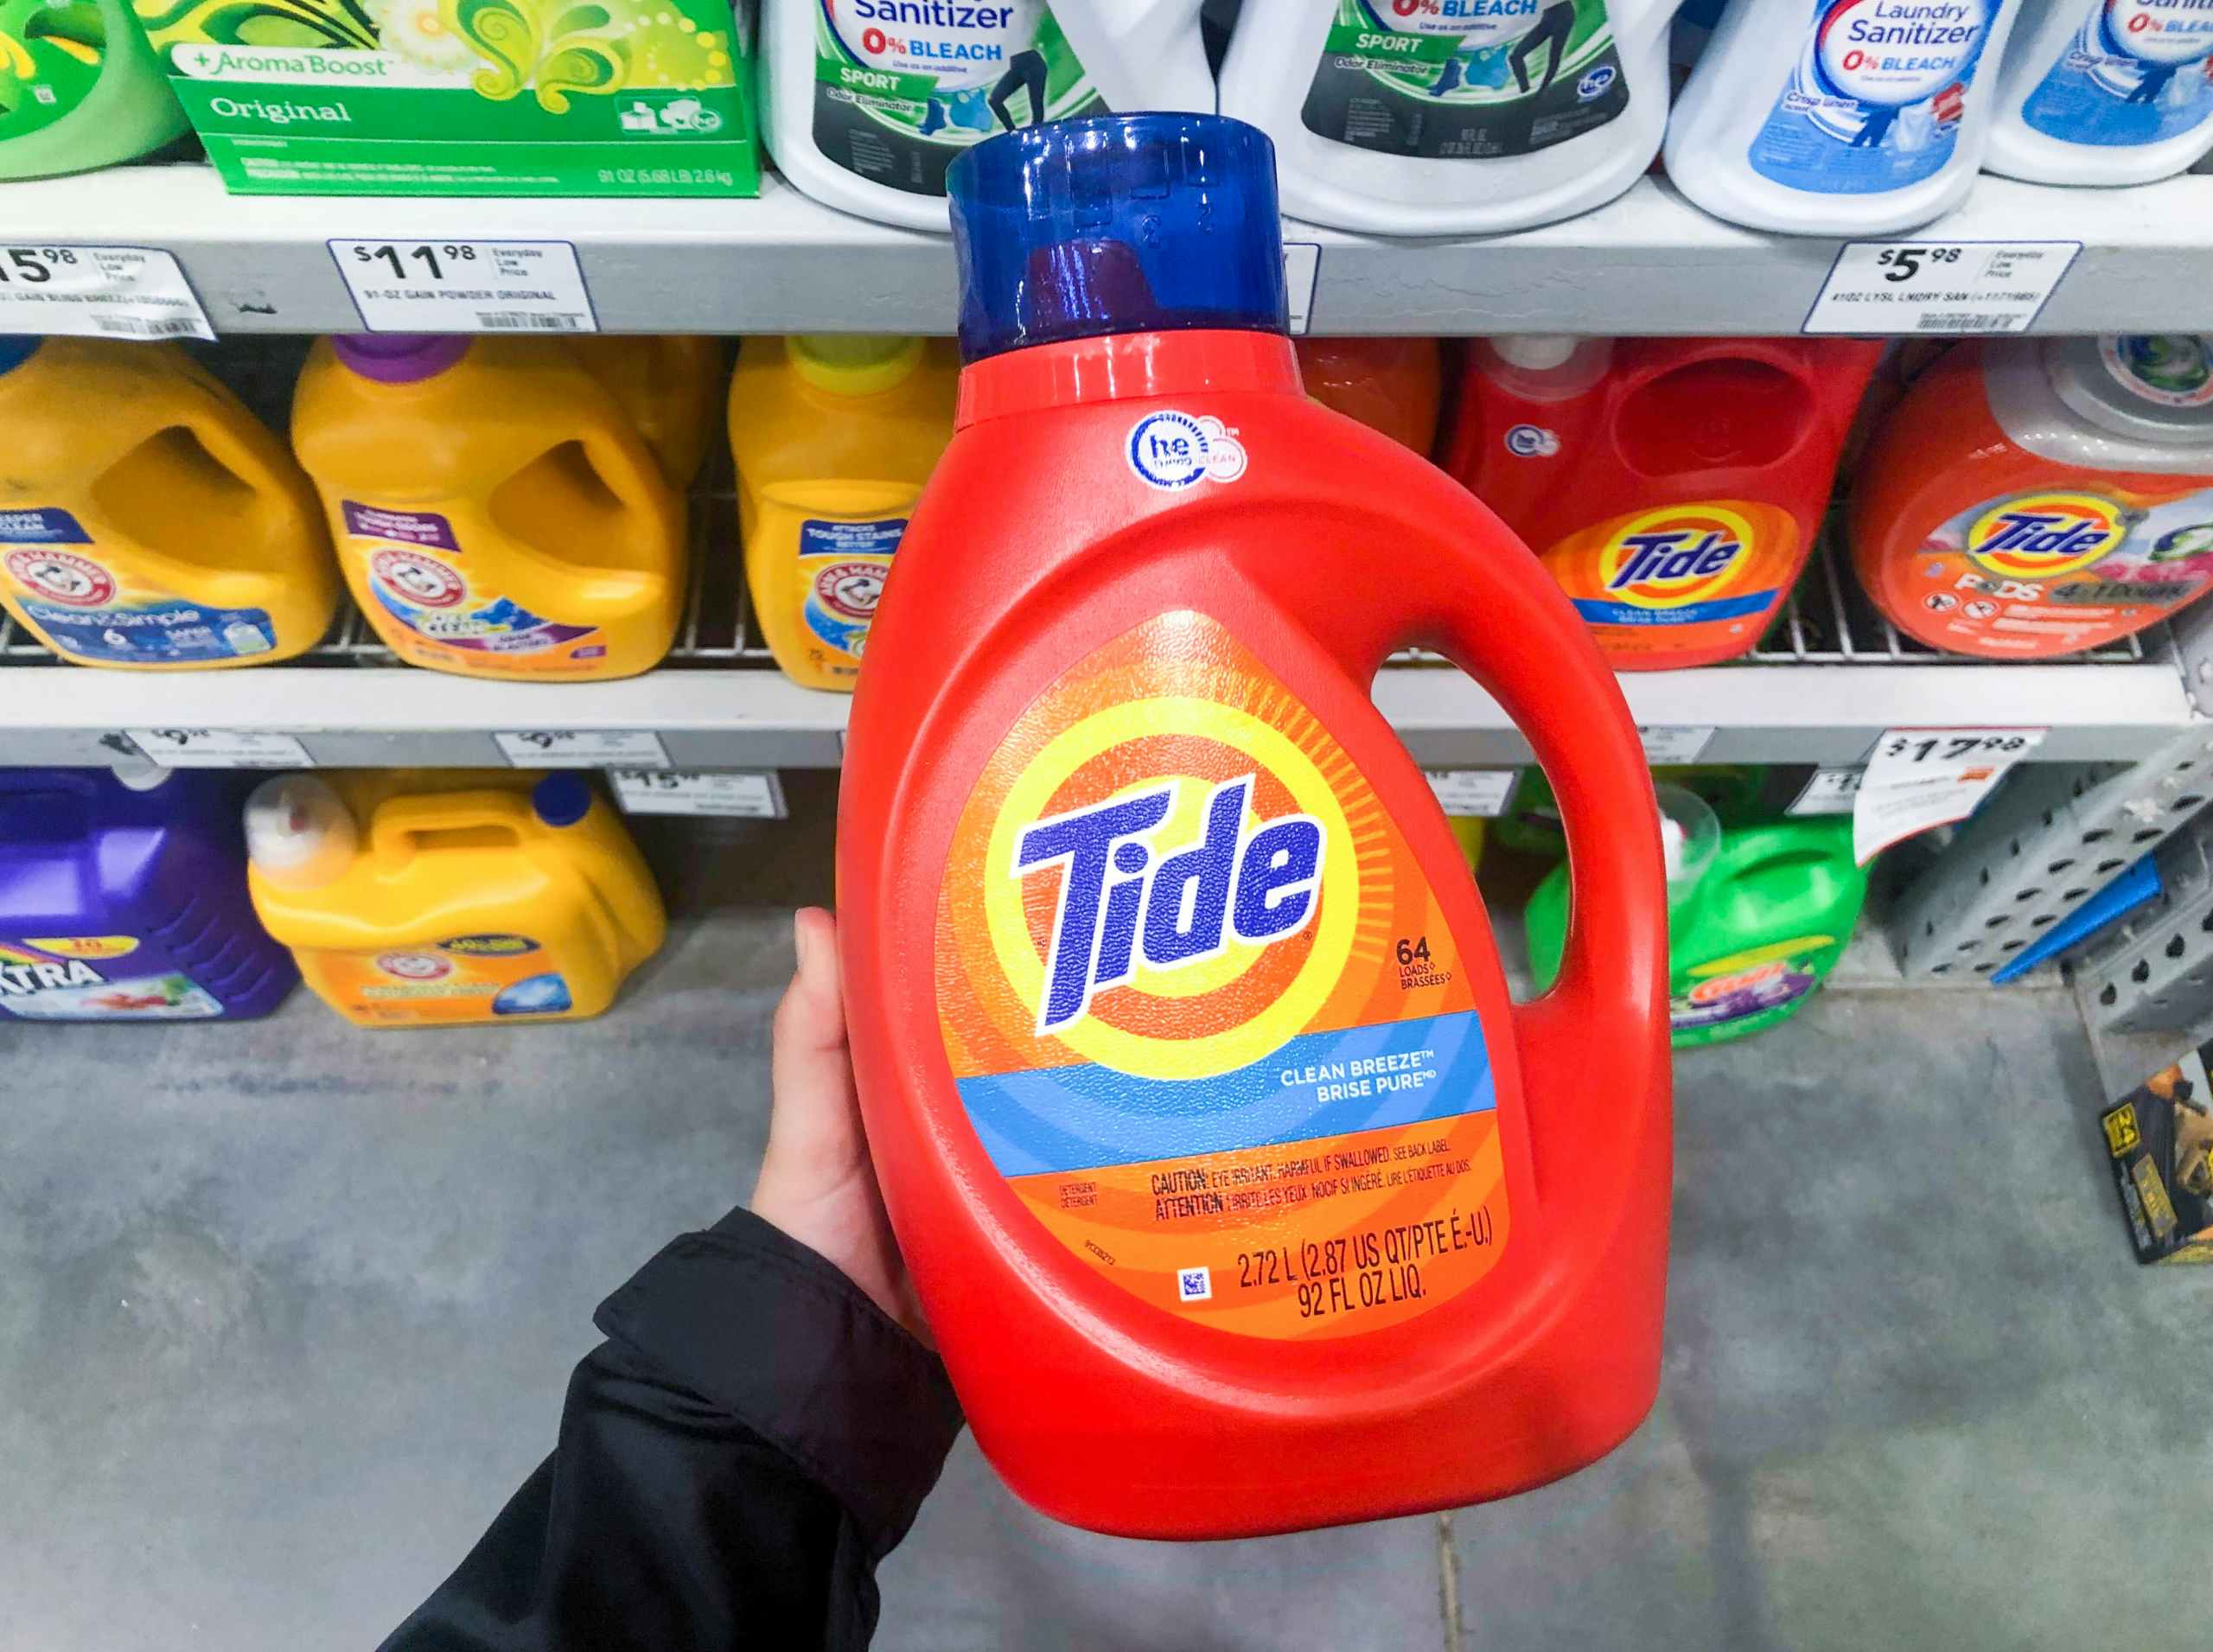 lowes-tide-laundry-detergent-2021